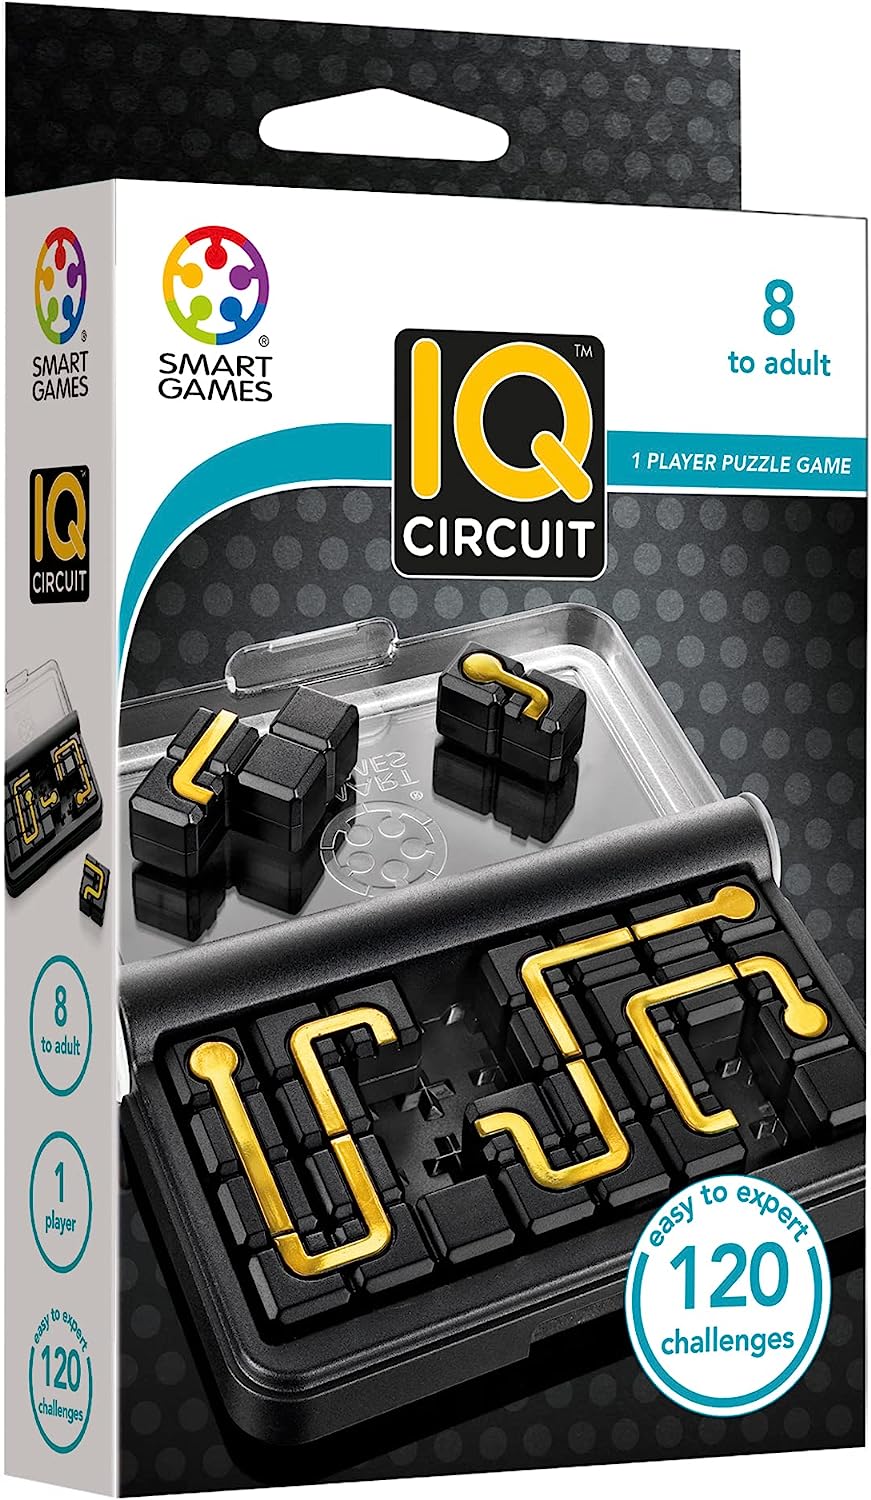 Ver categoría de iq circuit